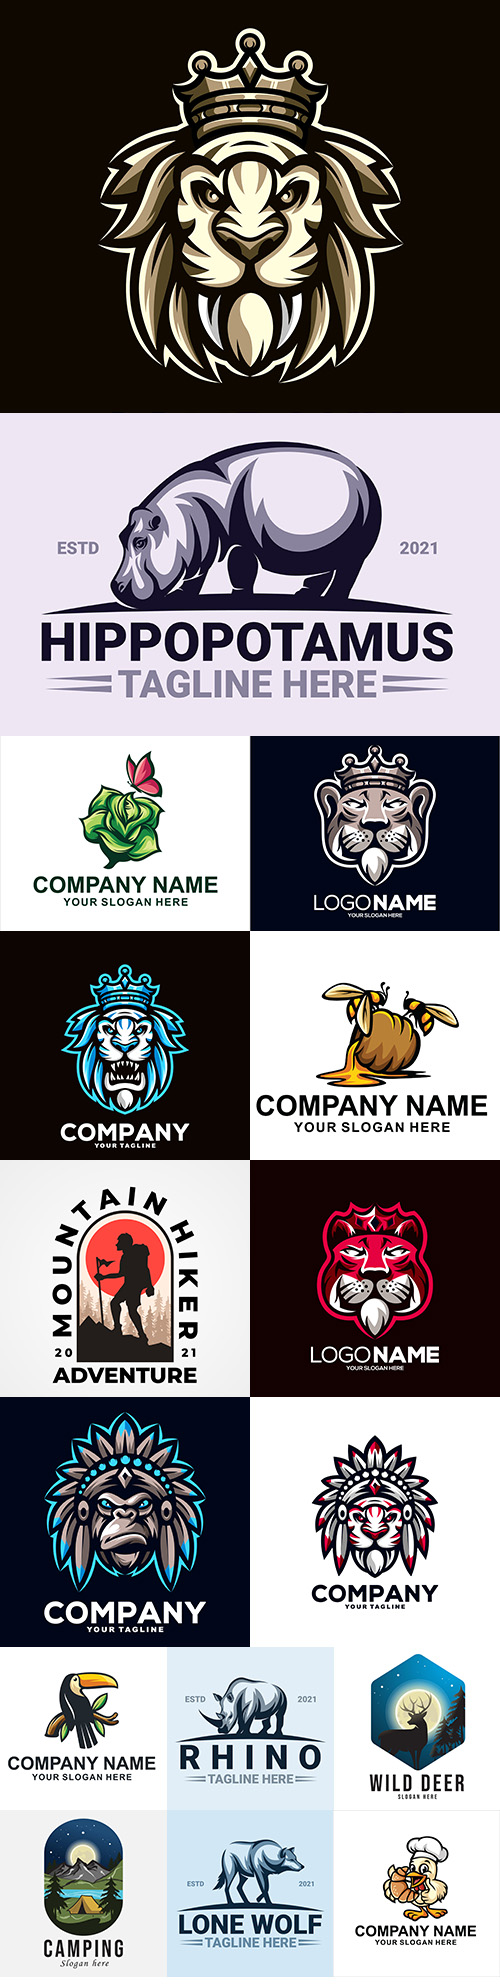 Mascot emblem and brand name logos design 7
